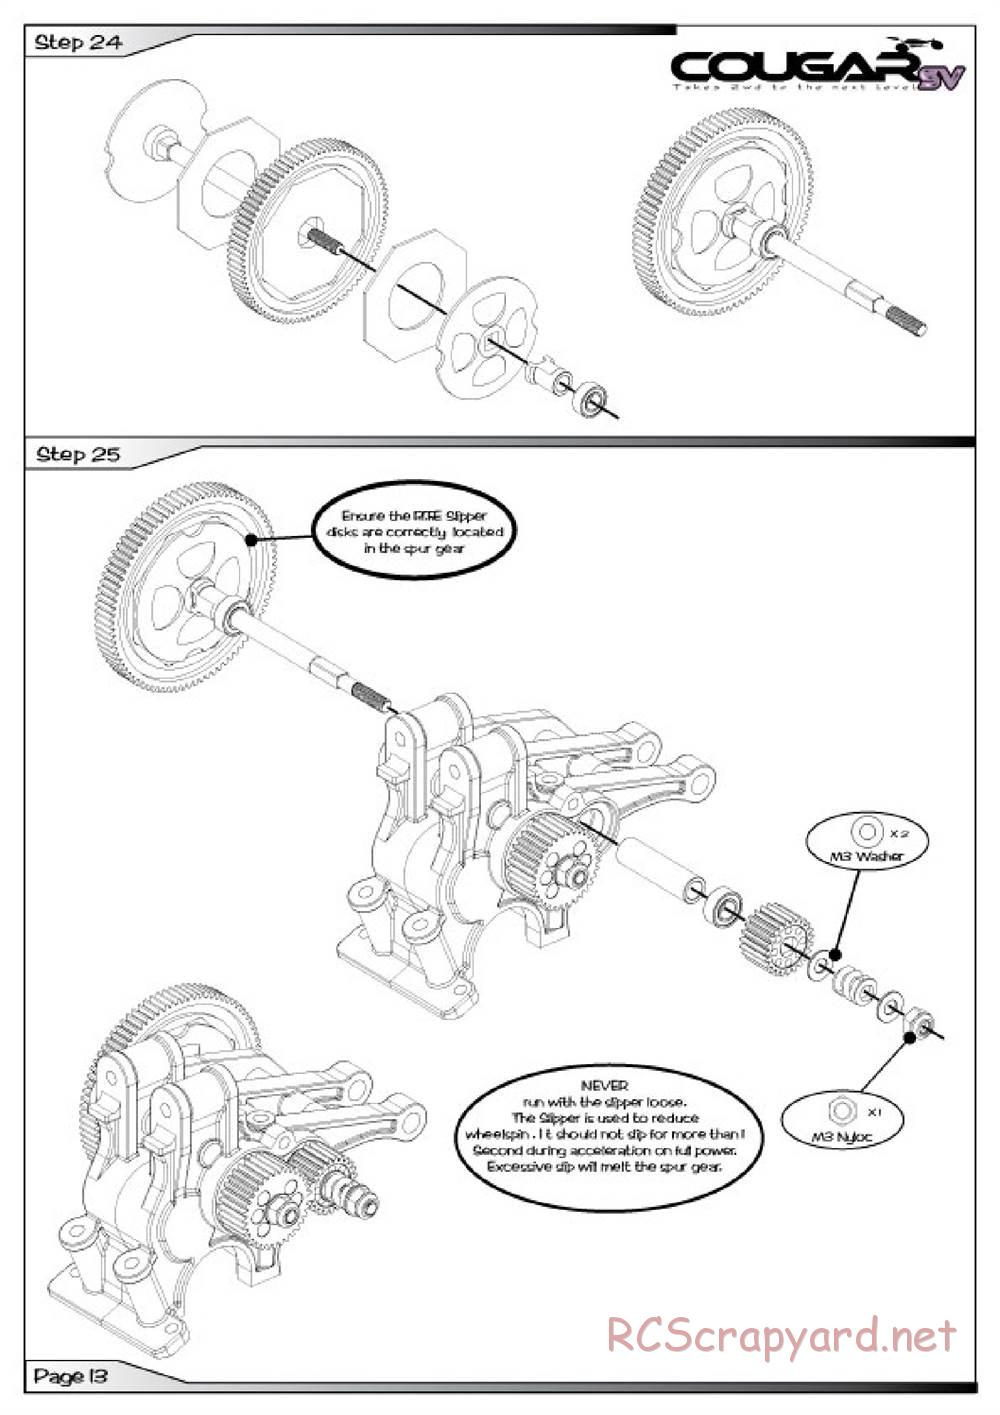 Schumacher - Cougar SV - Manual - Page 14